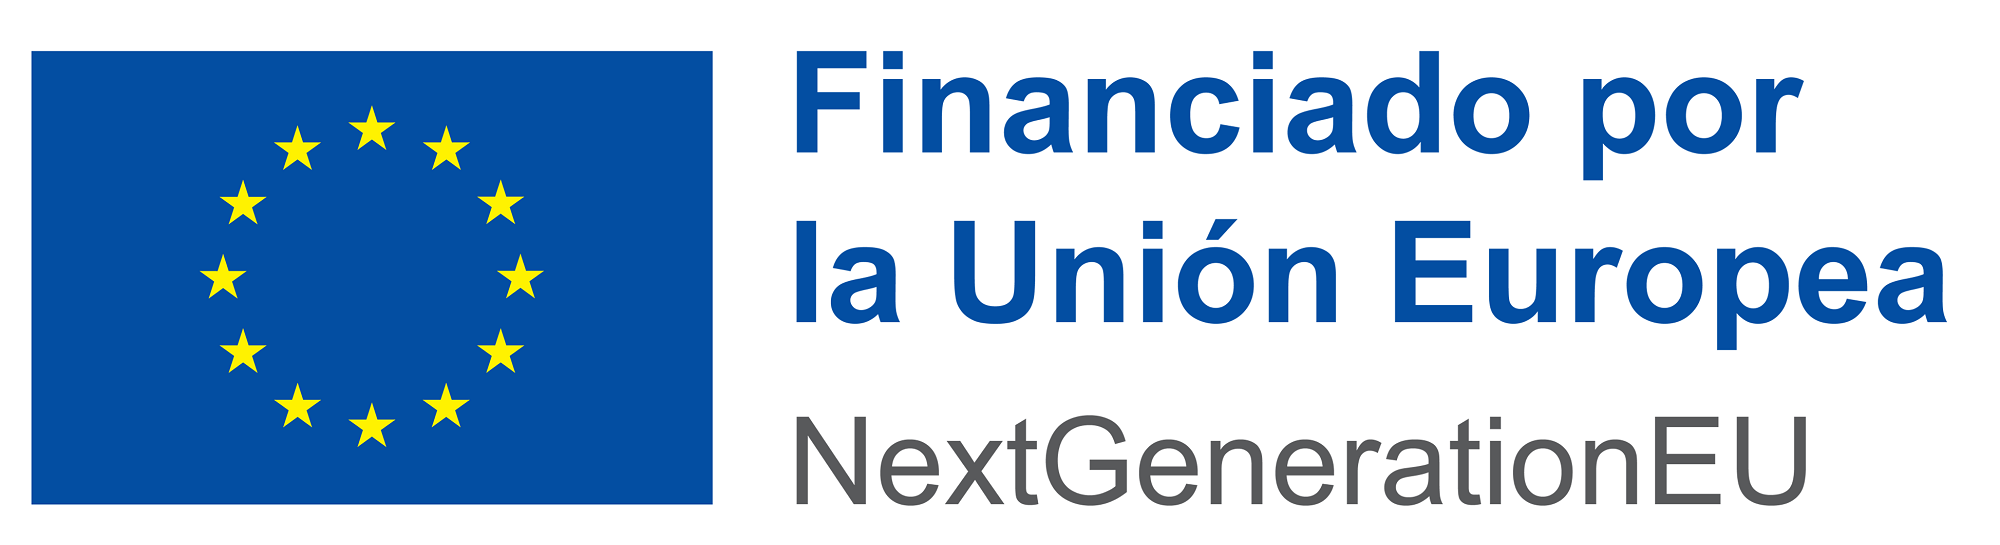 Logotipo Fondos Next Generation